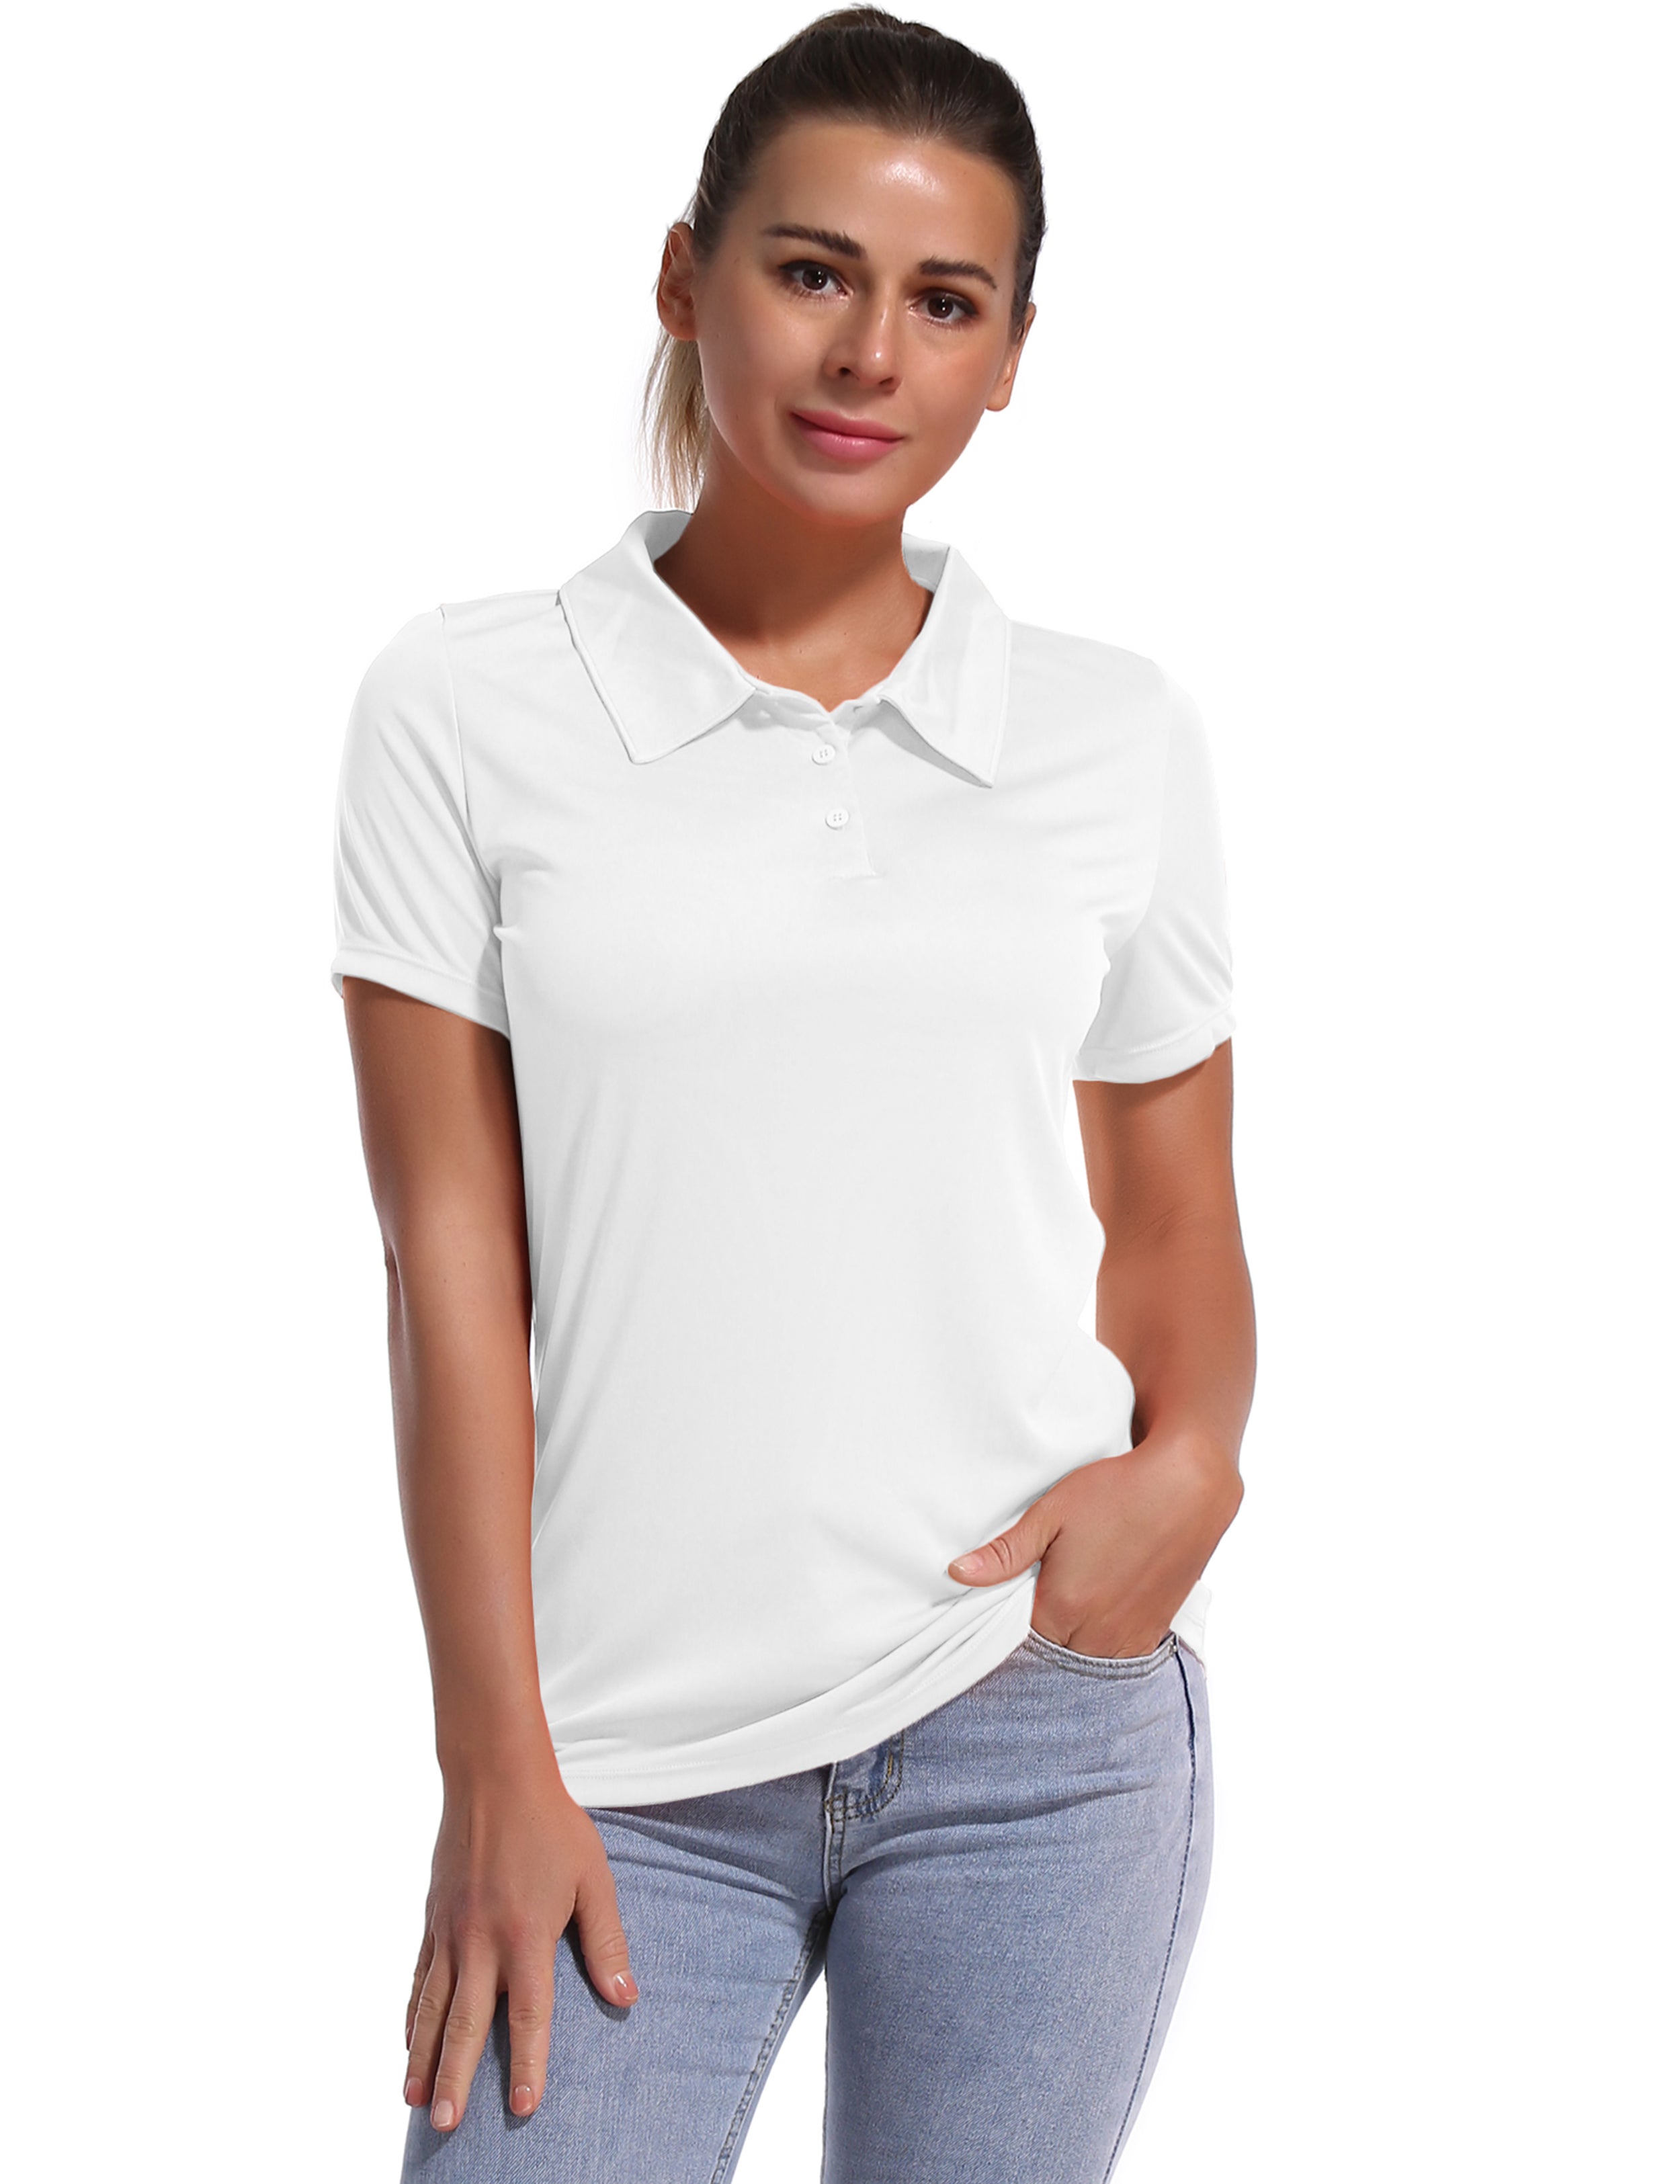 Short Sleeve Slim Fit Polo Shirt white ins_Golf